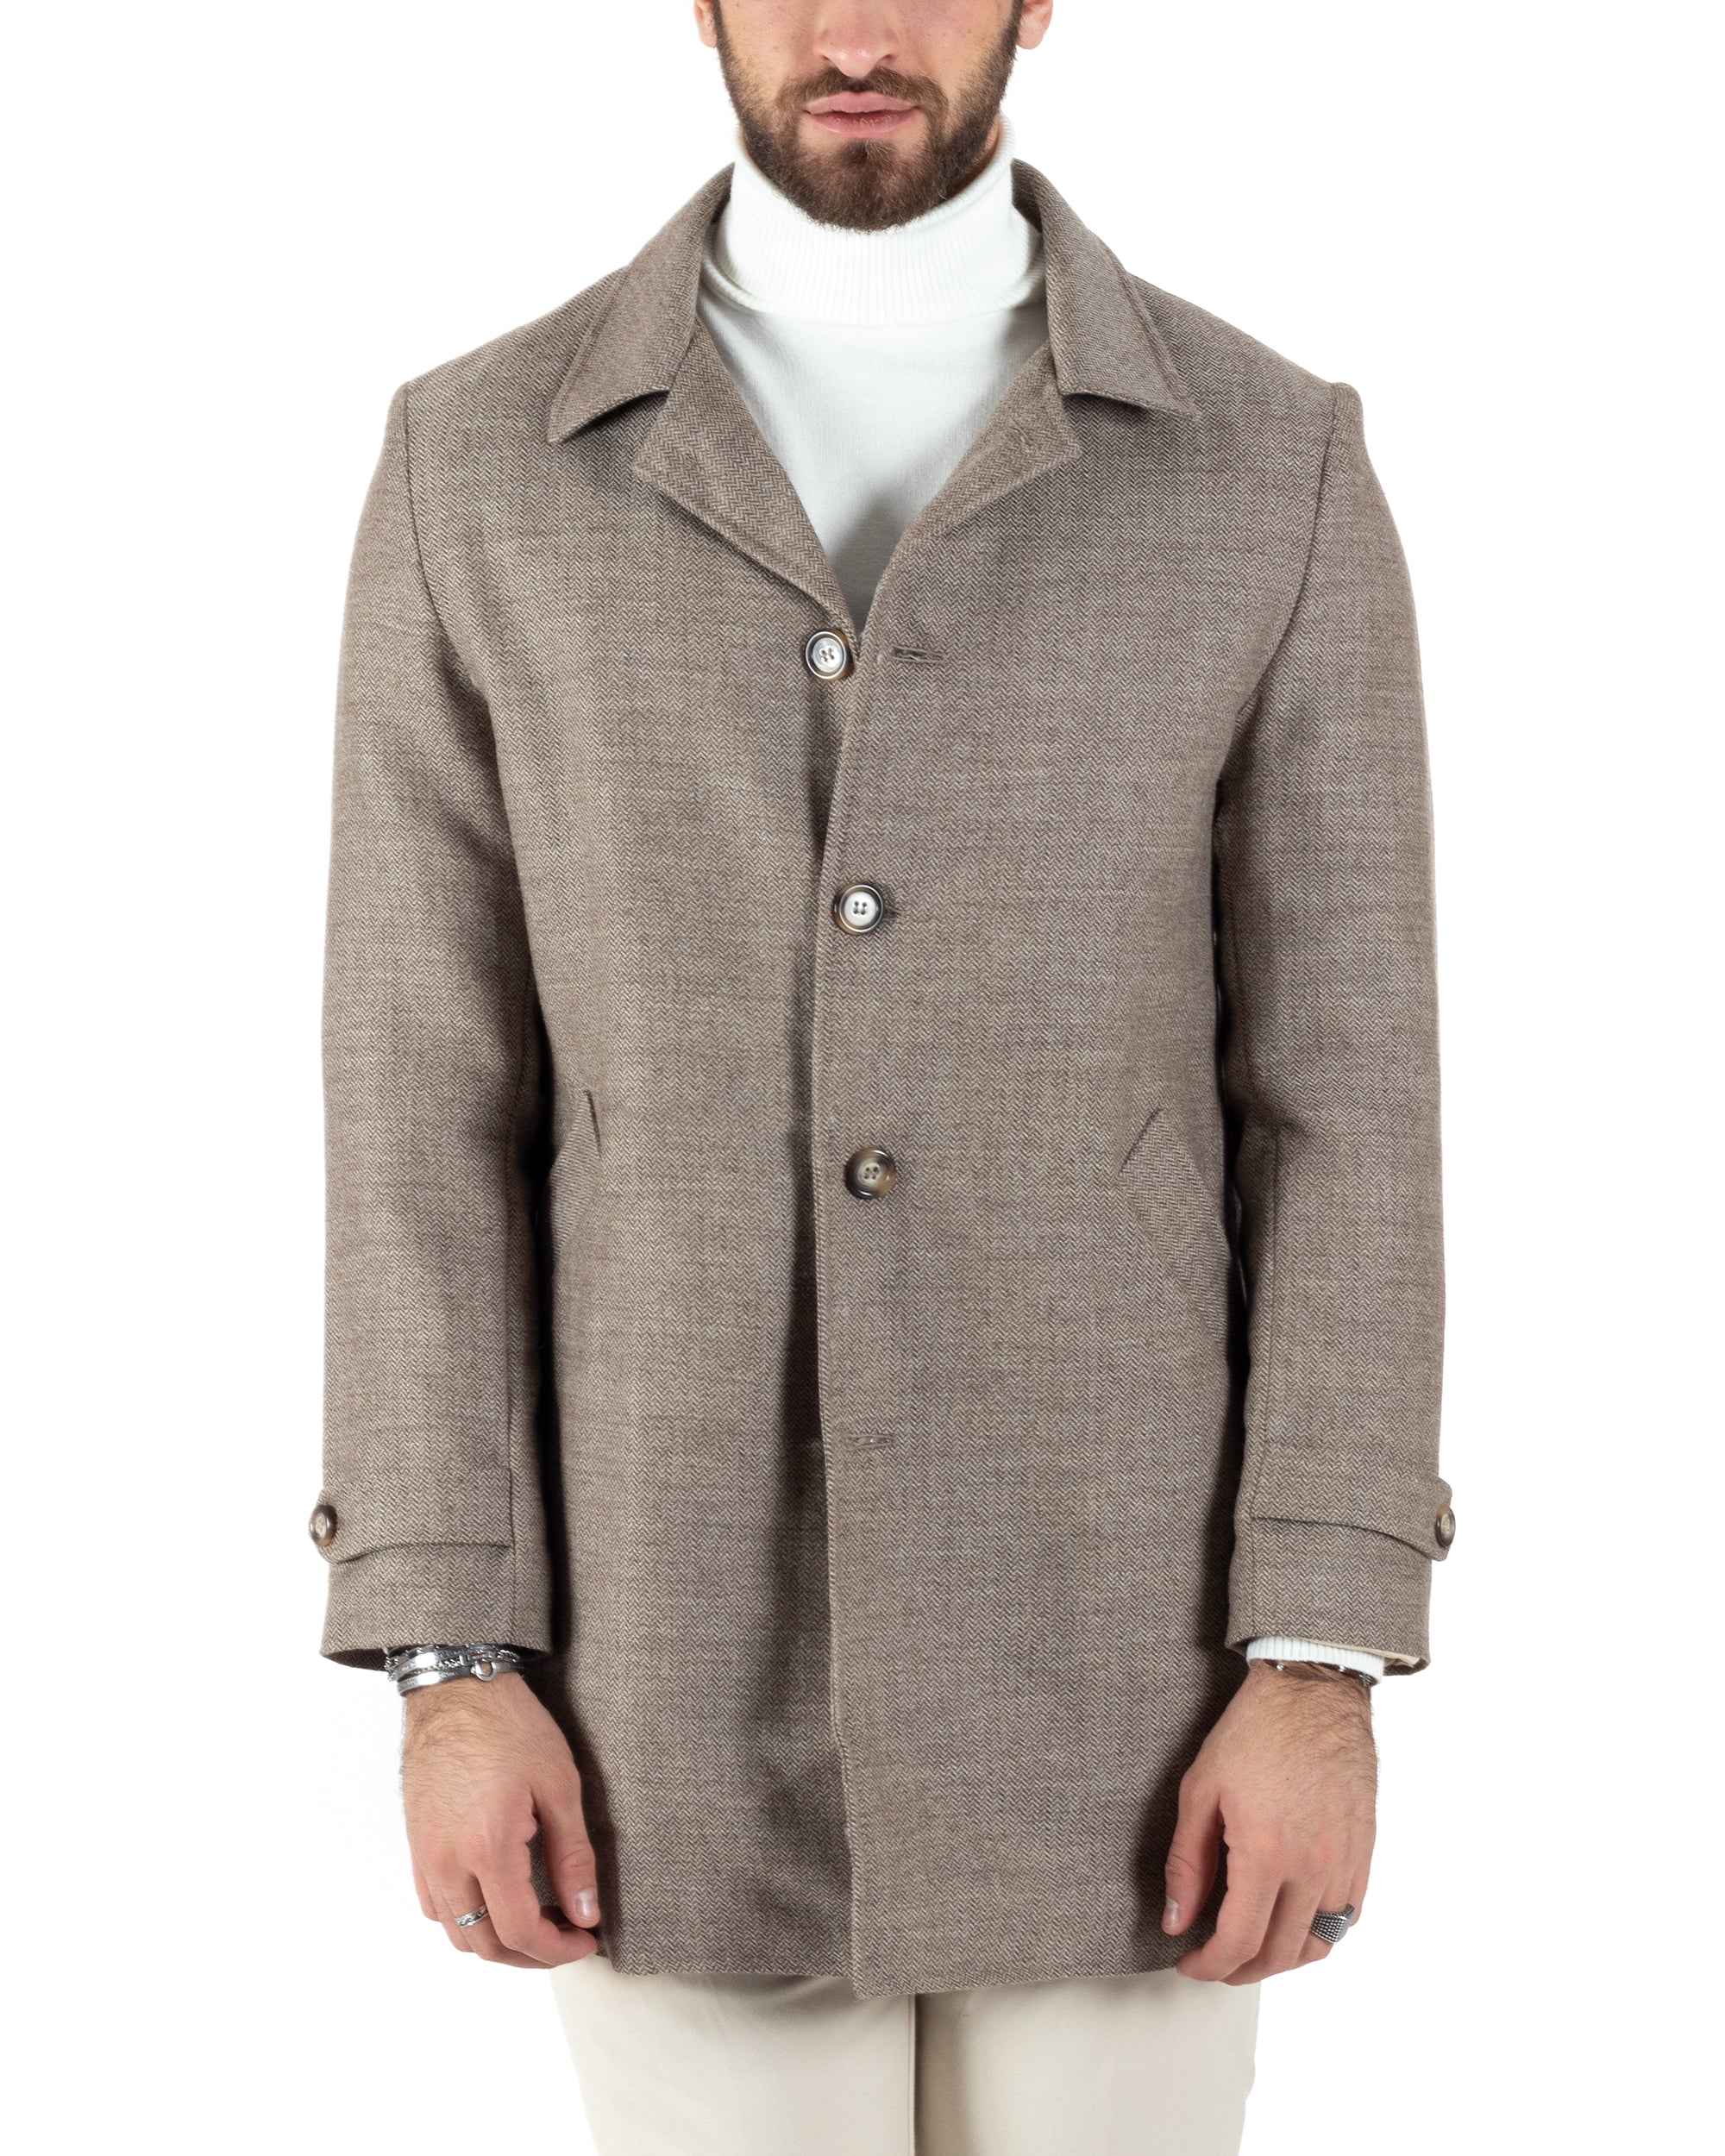 Men's Single-Breasted Jacket Coat With Dove Gray Jacket Collar Elegant Casual Baronet Jacket GIOSAL-G2998A